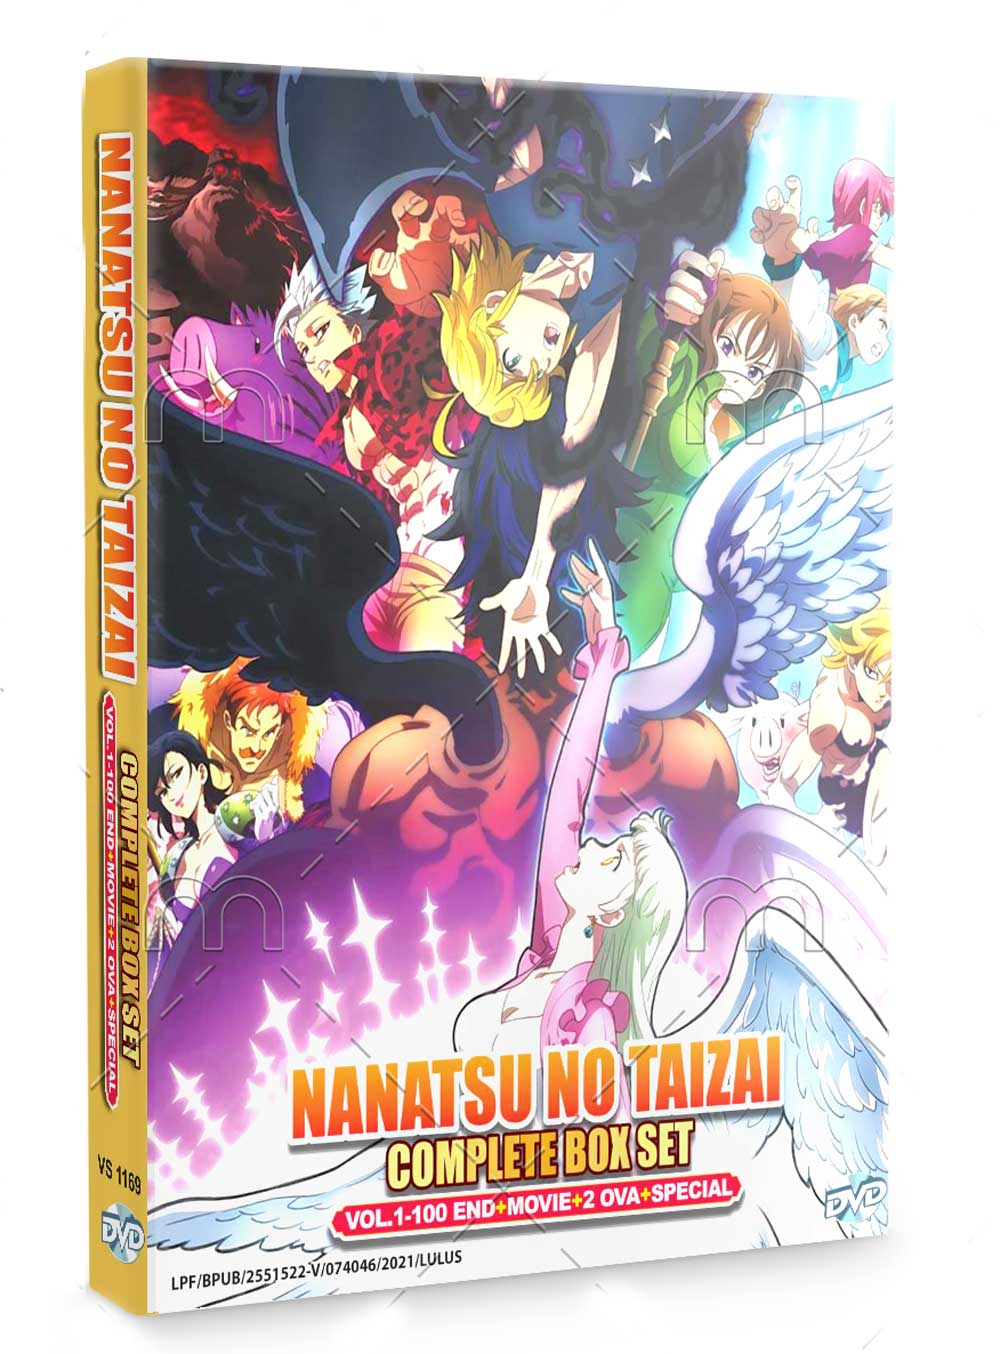 Nanatsu no Taizai TV 1-100 End + Movie + 2OVA + Special (DVD) (2021) Anime